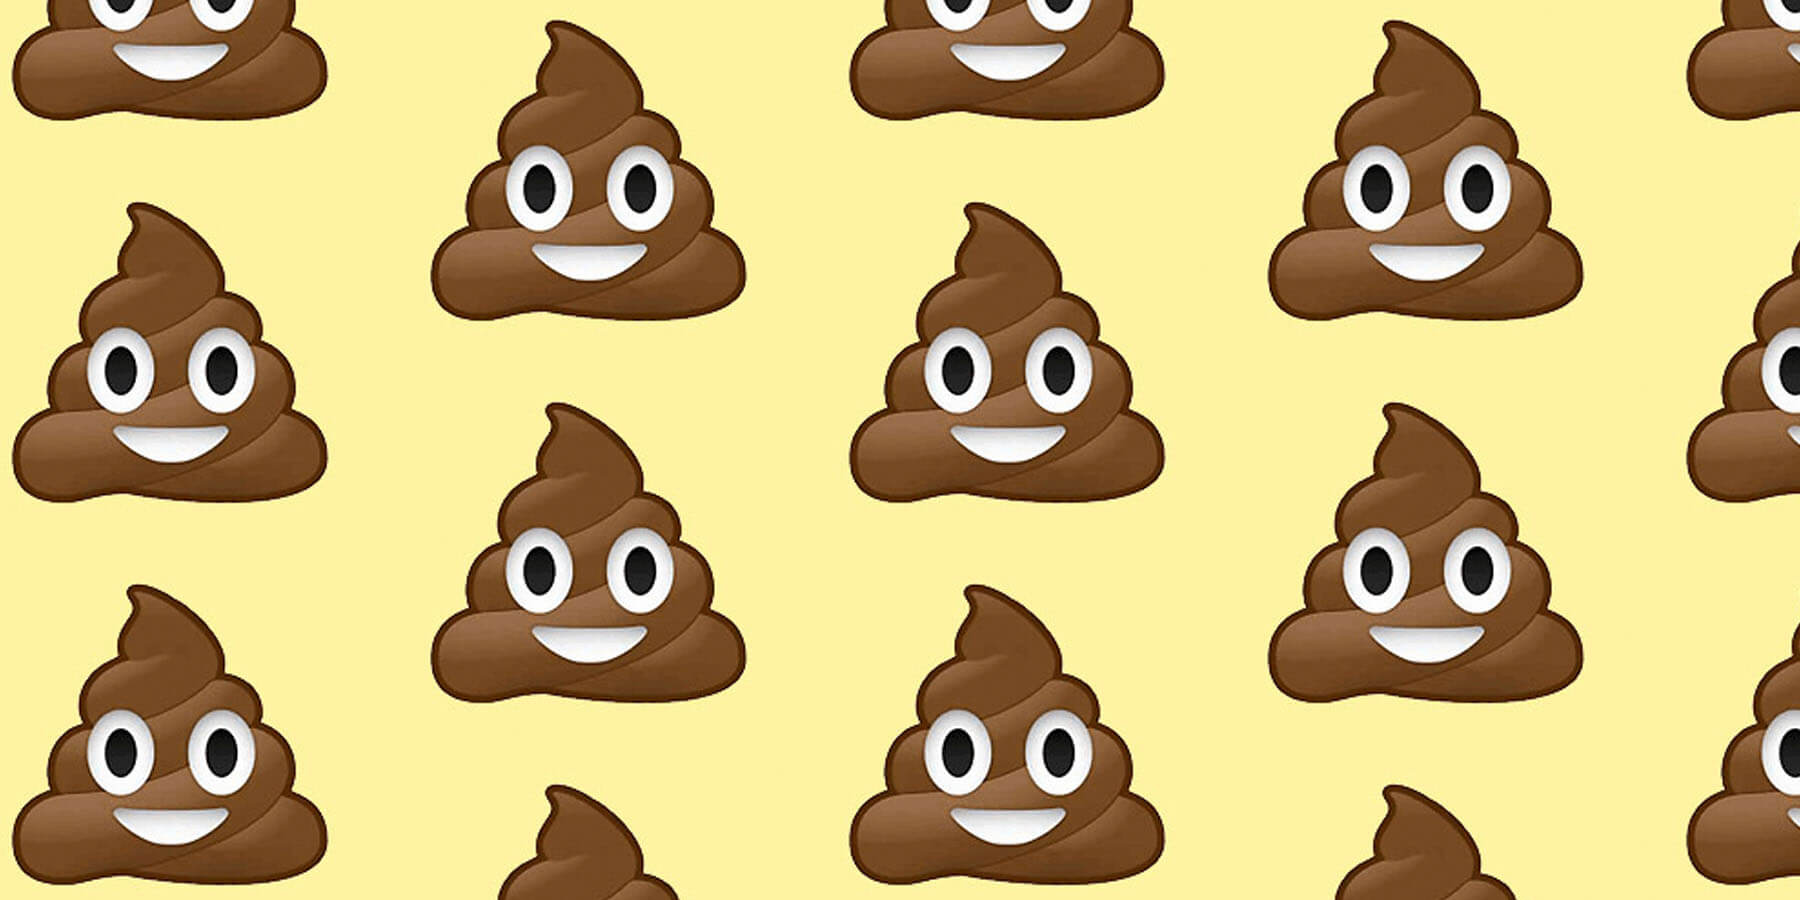 Marketing with Emojis: The 20 Best & Worst Emoji Marketing